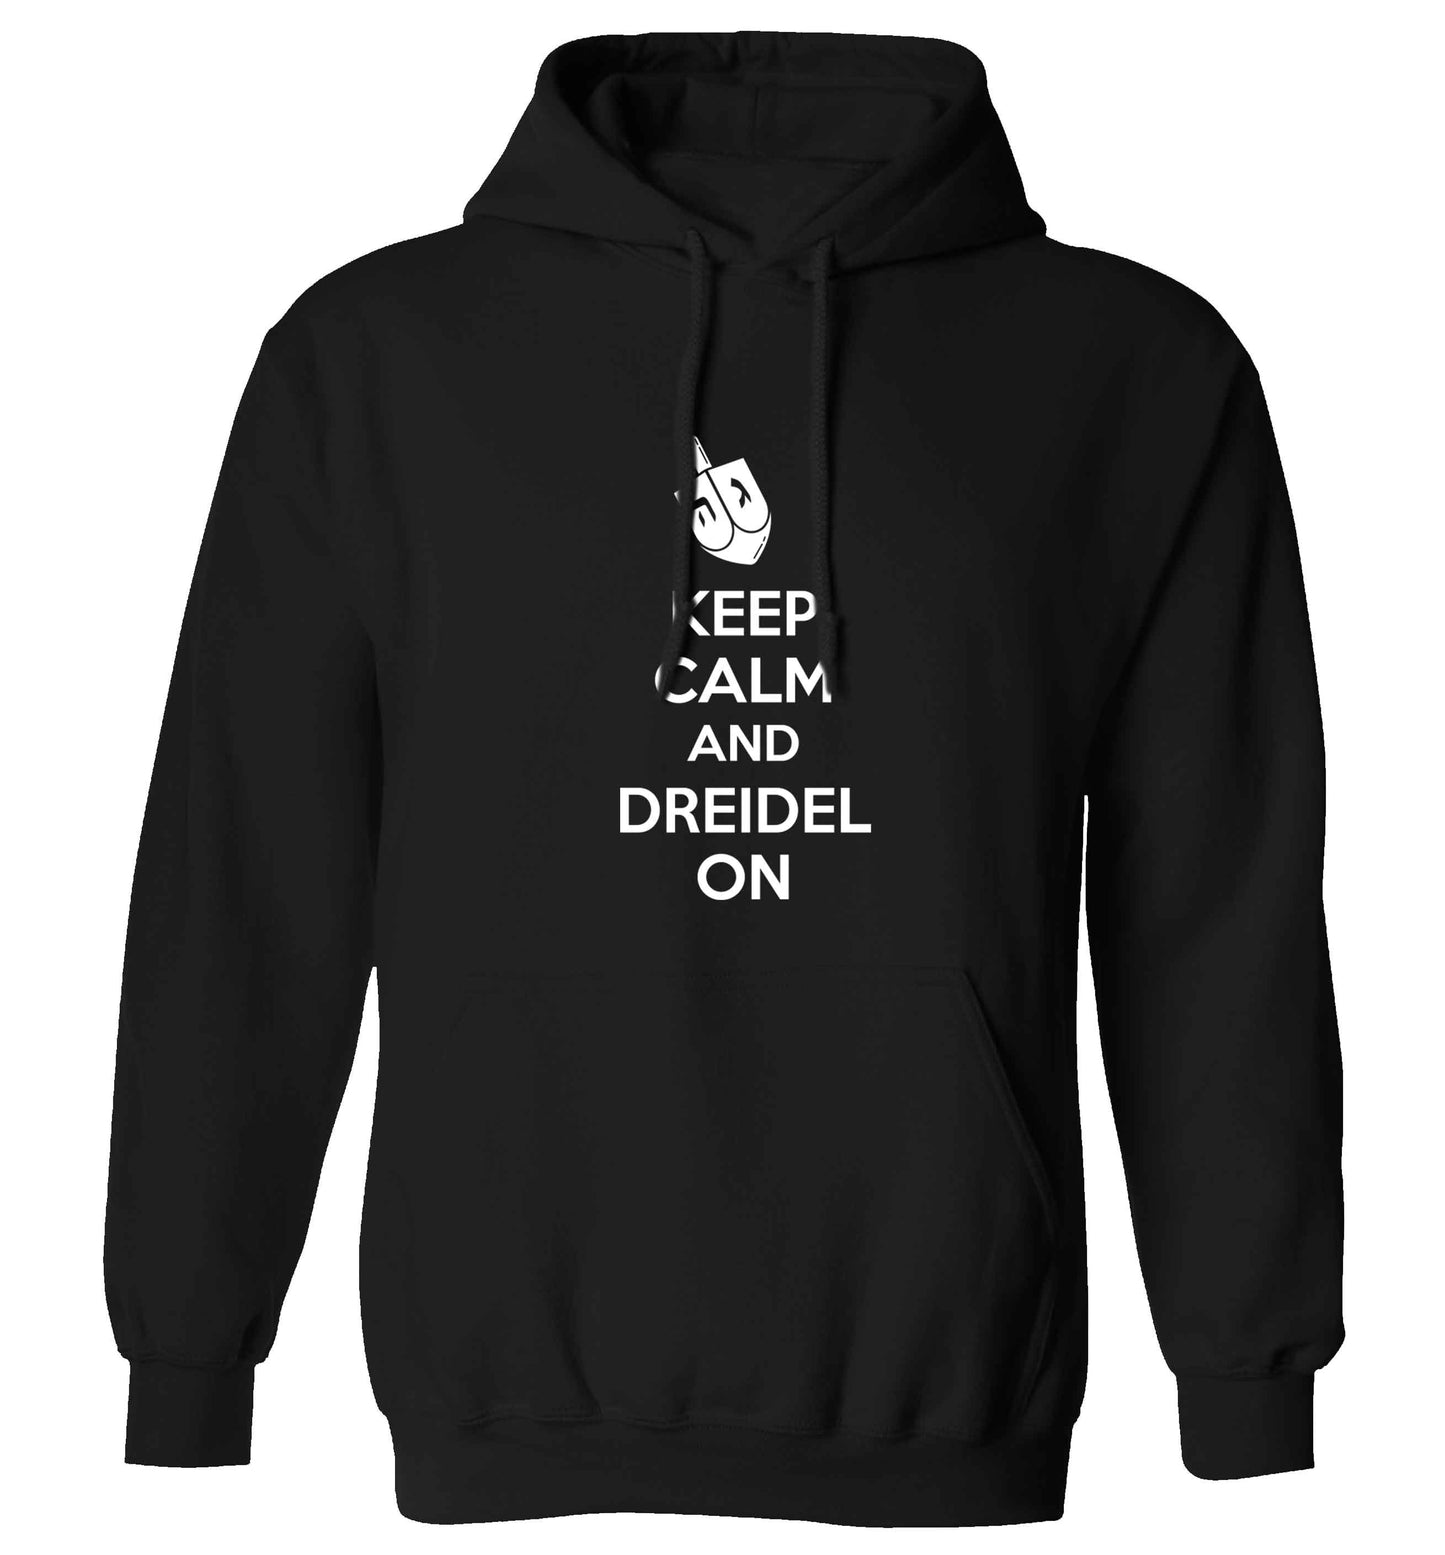 Keep calm and dreidel on adults unisex black hoodie 2XL